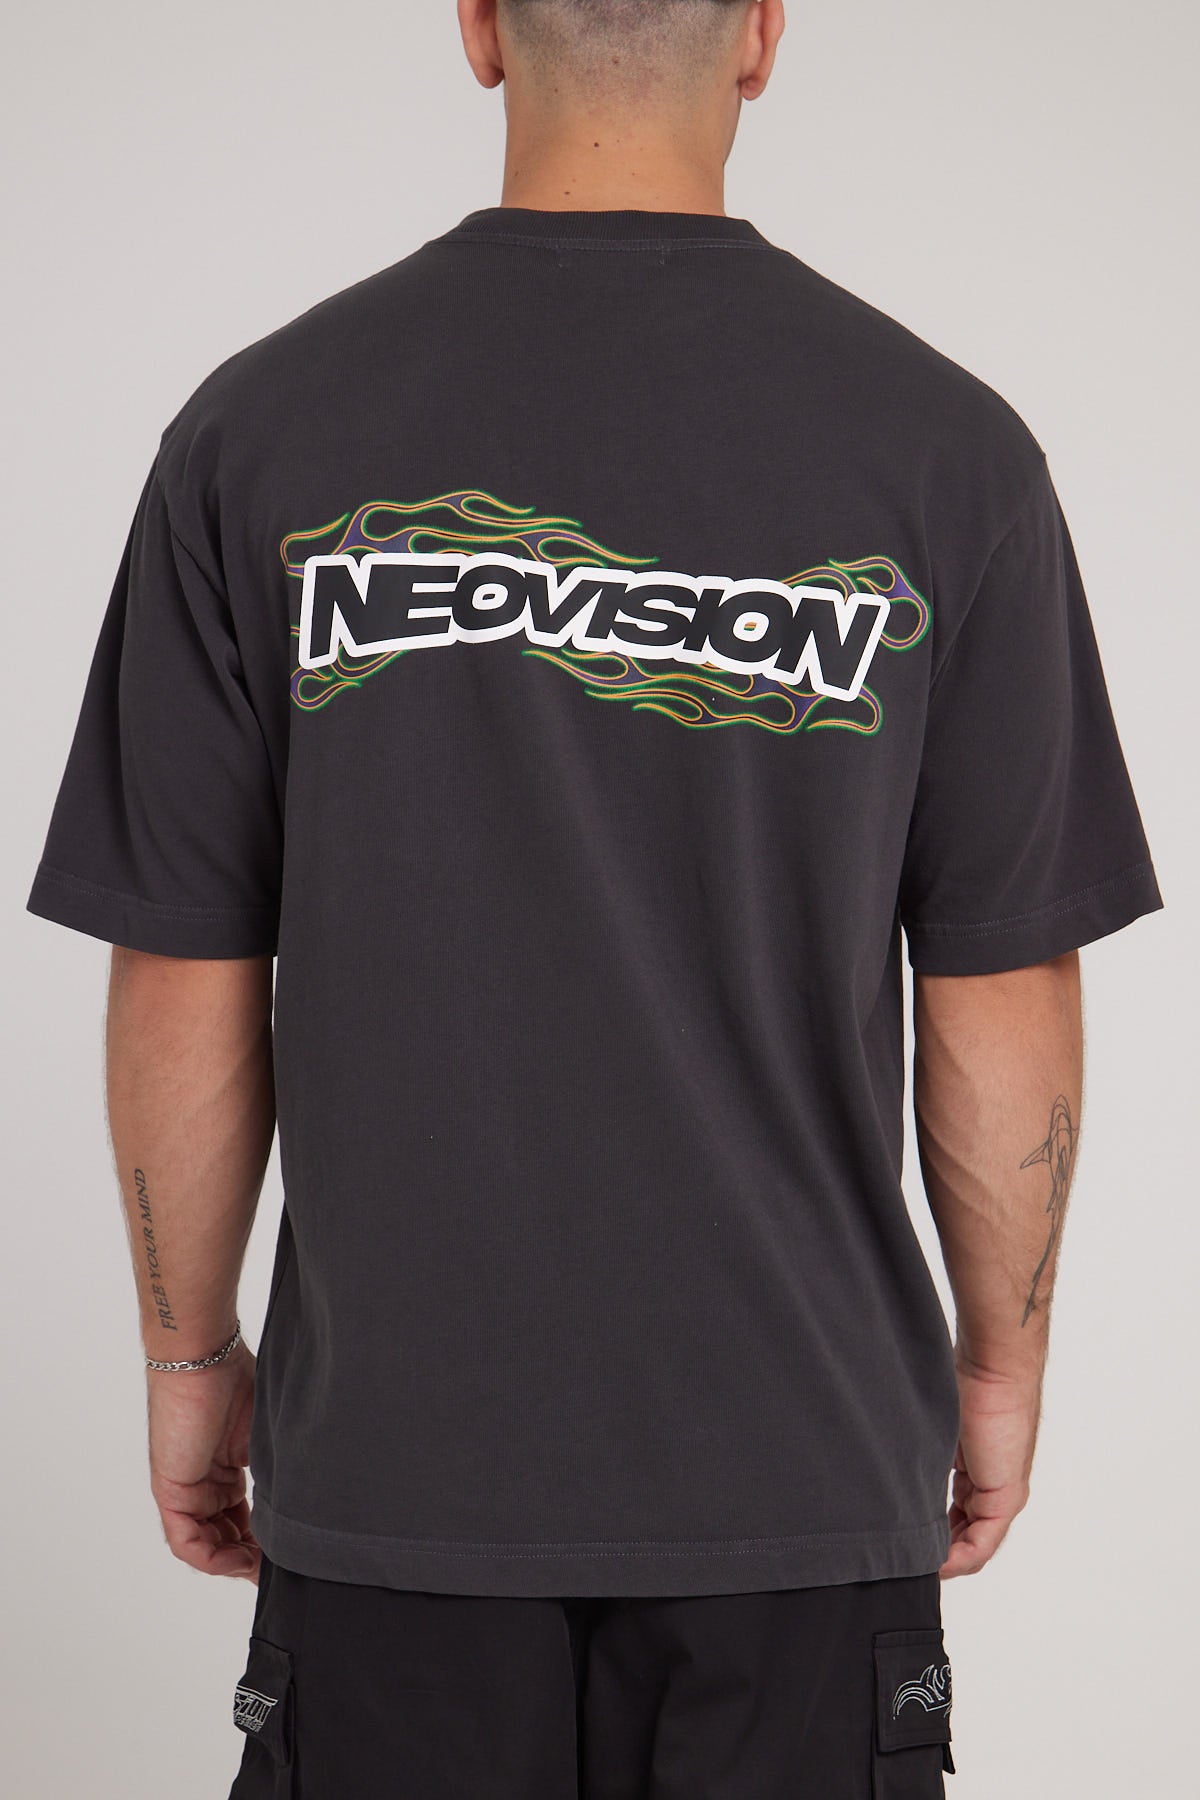 Neovision Twin Turbo Oversize Super Heavy Tee Washed Black